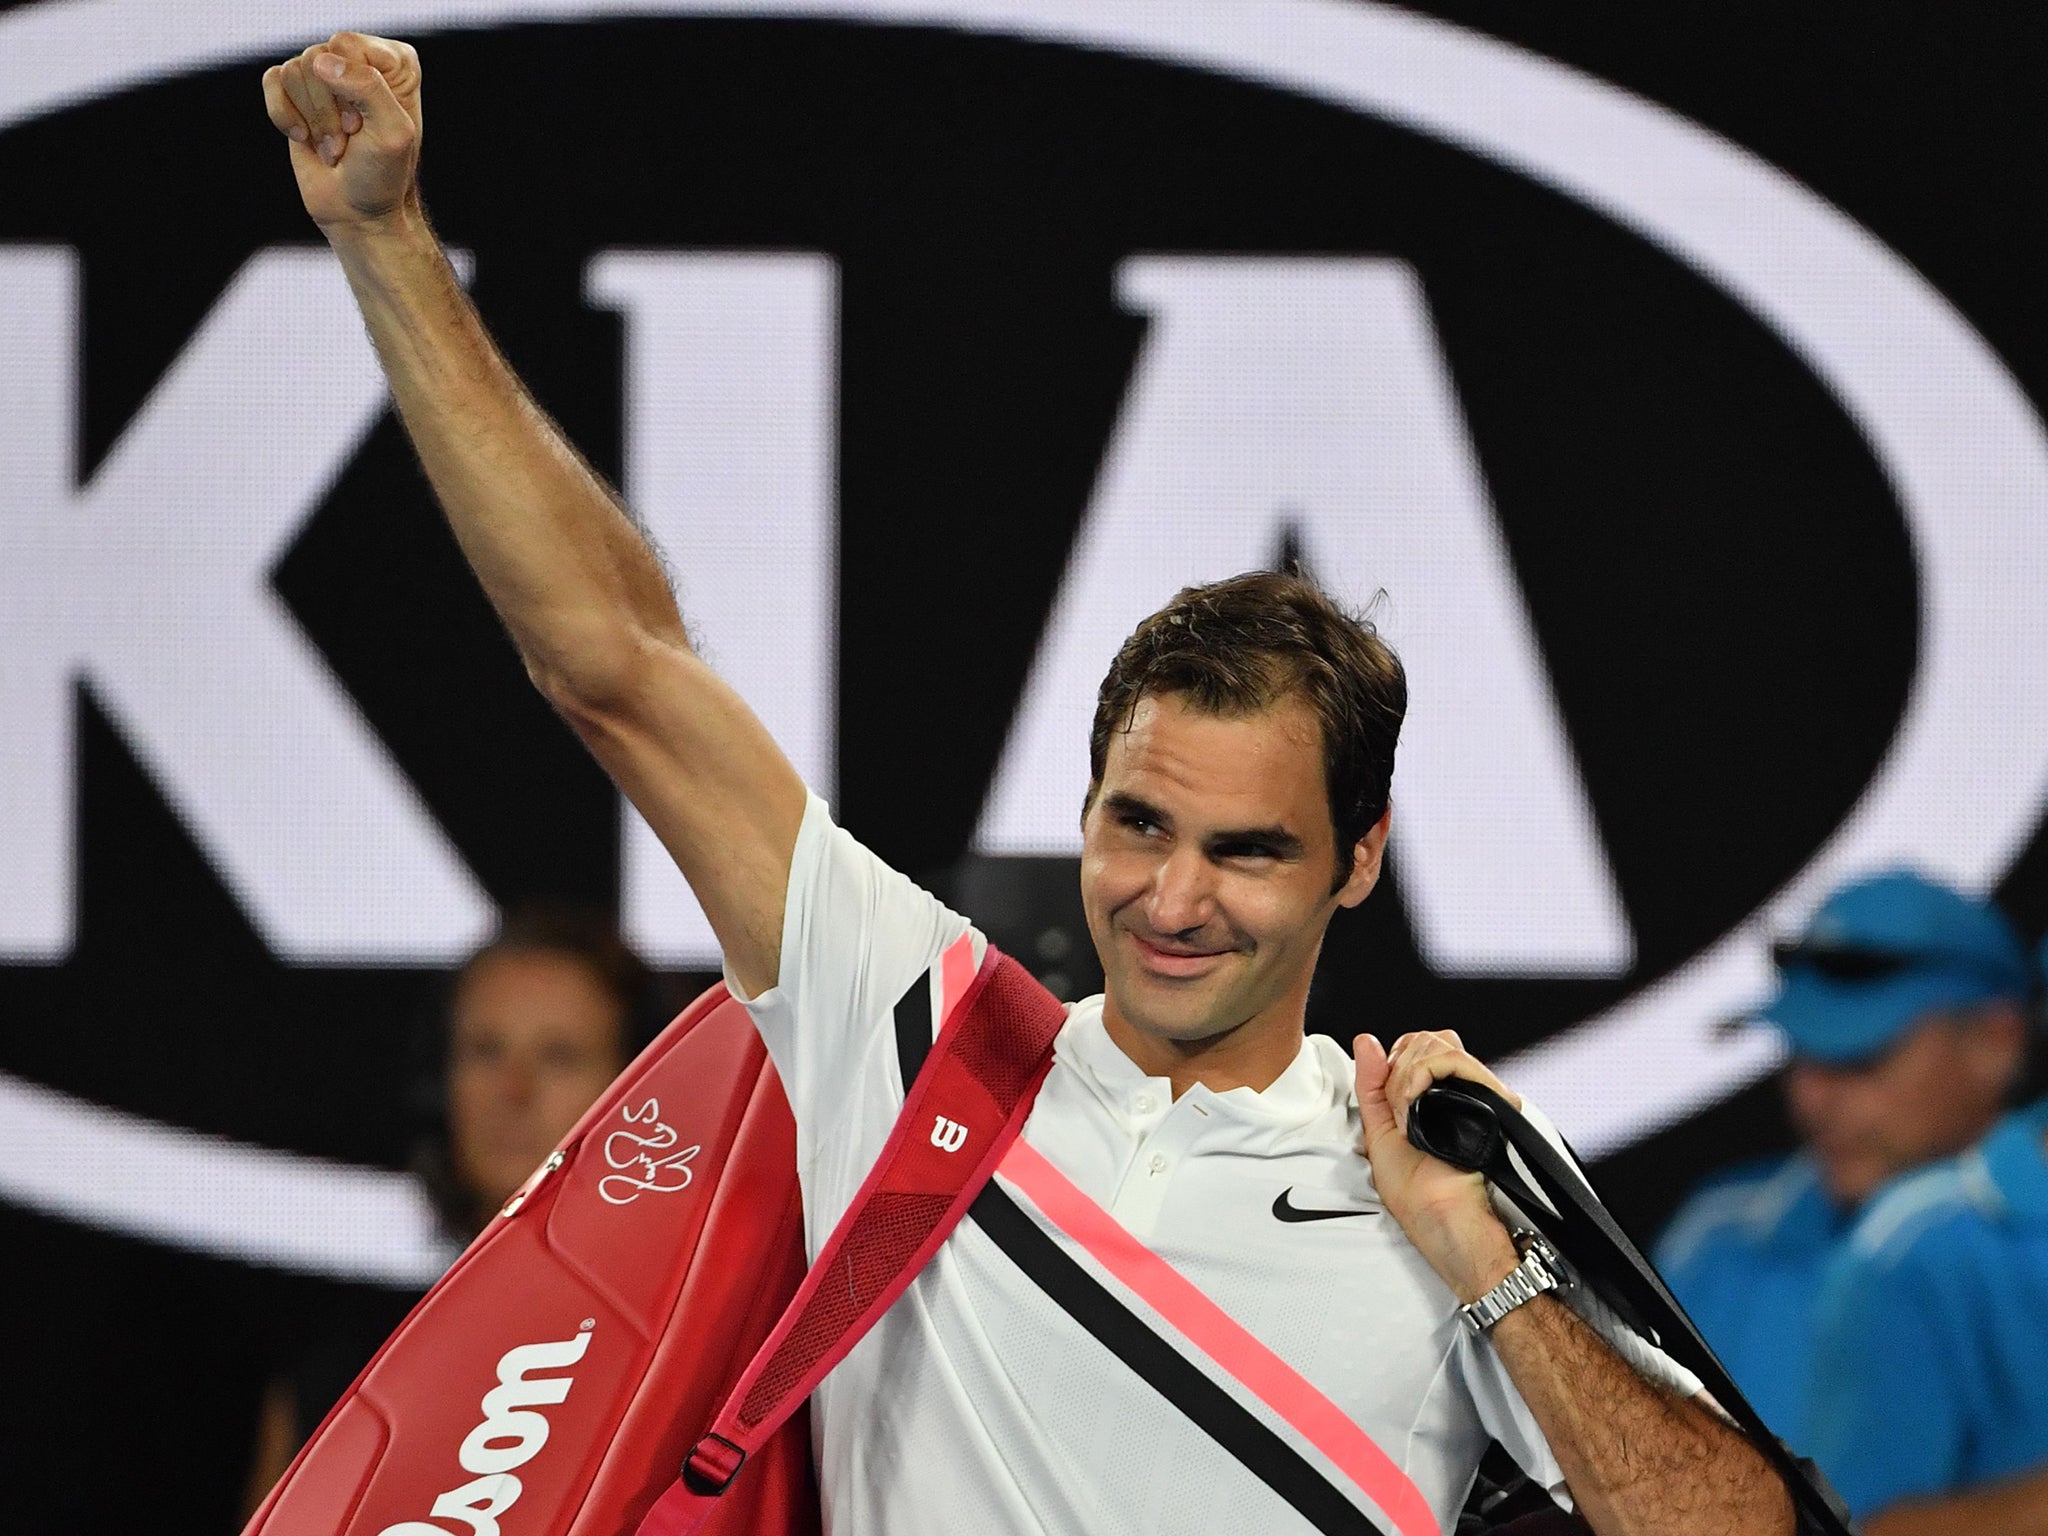 Roger Federer will face Marin Cilic in the Australian Open final